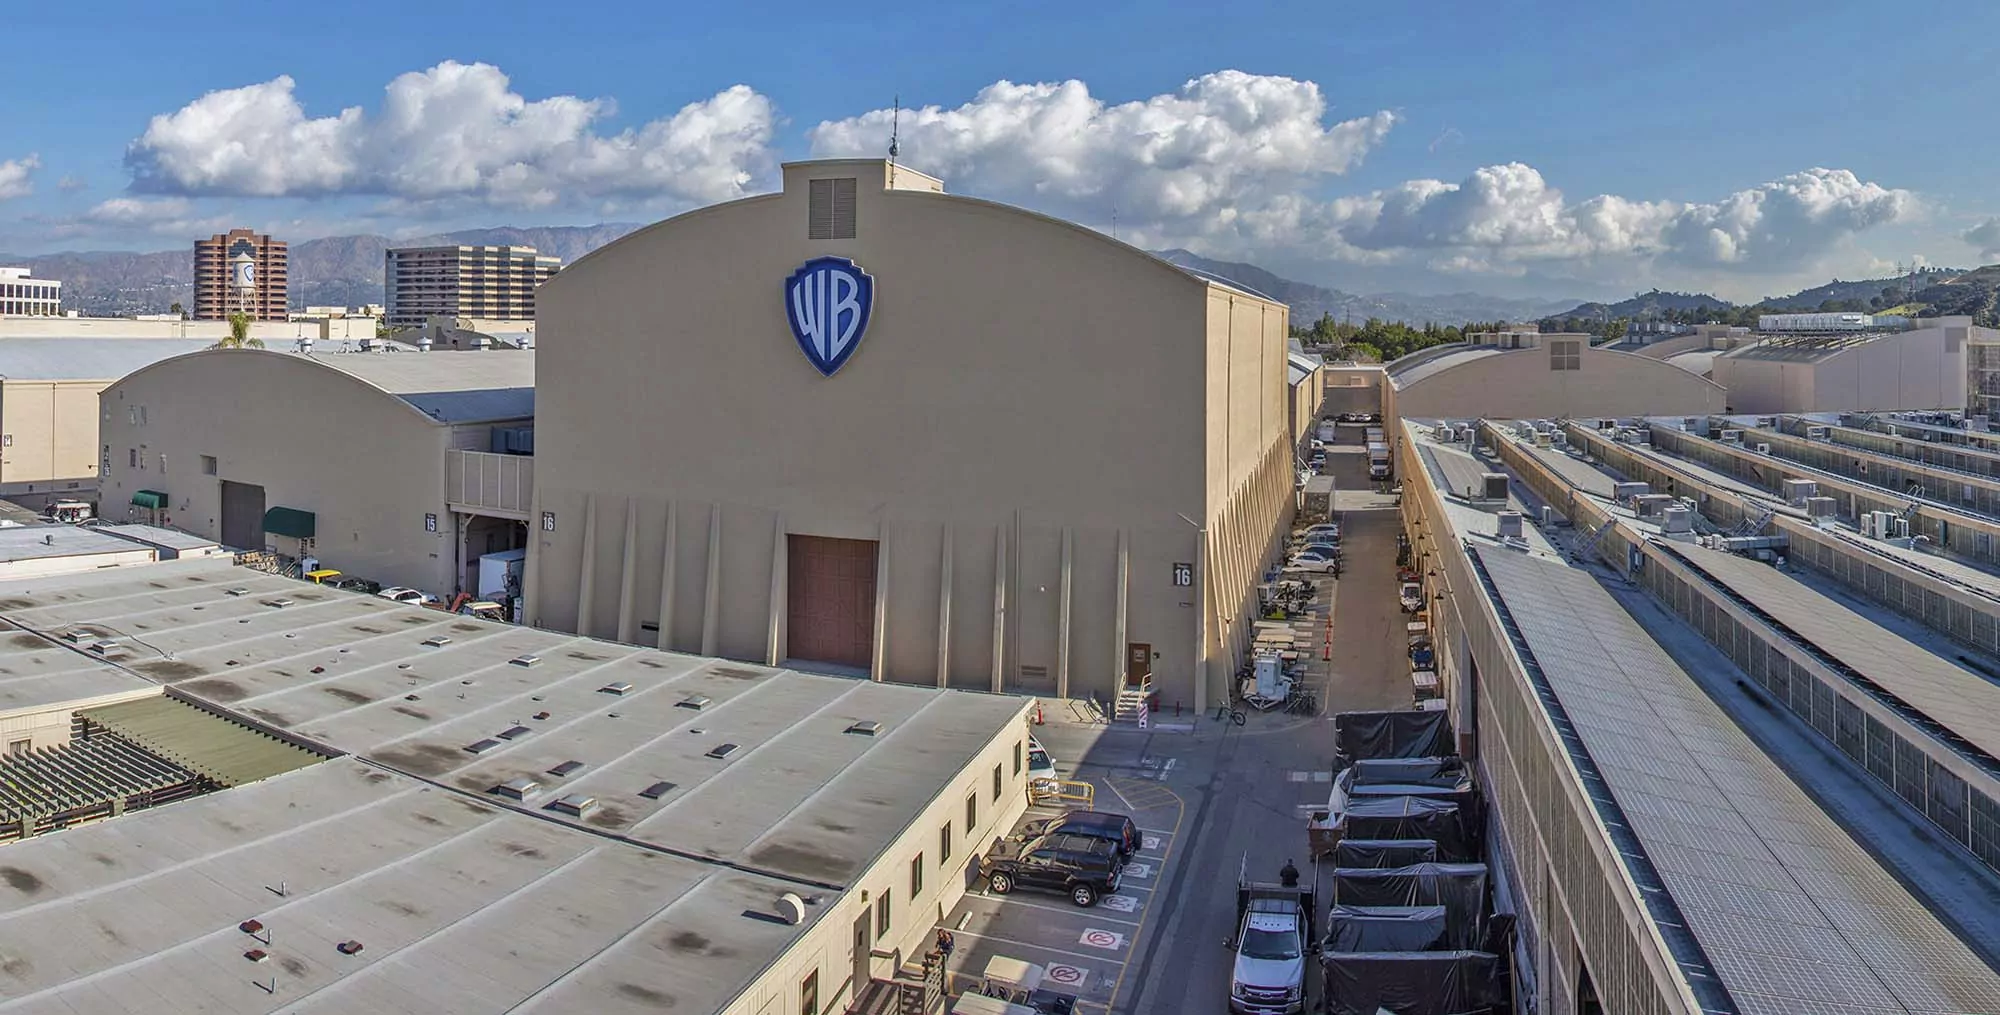 Warner Bros. Studio- I am meeting Stars